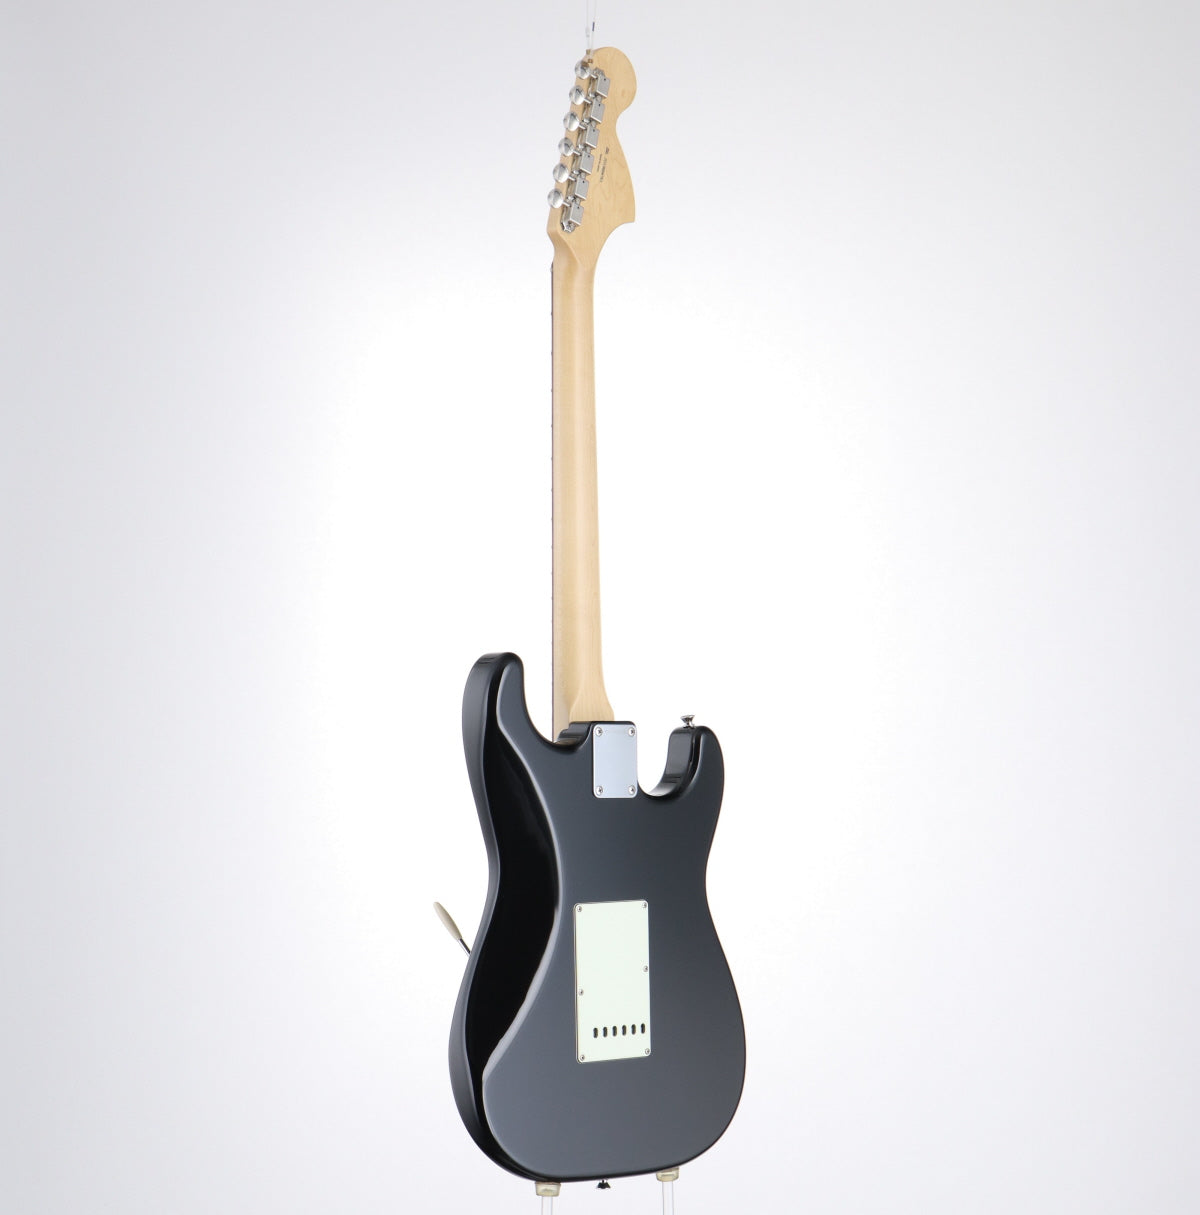 [SN JD1900783] USED Fender / Stratocaster Seattle Black Rosewood Fingerboard 2019 [06]